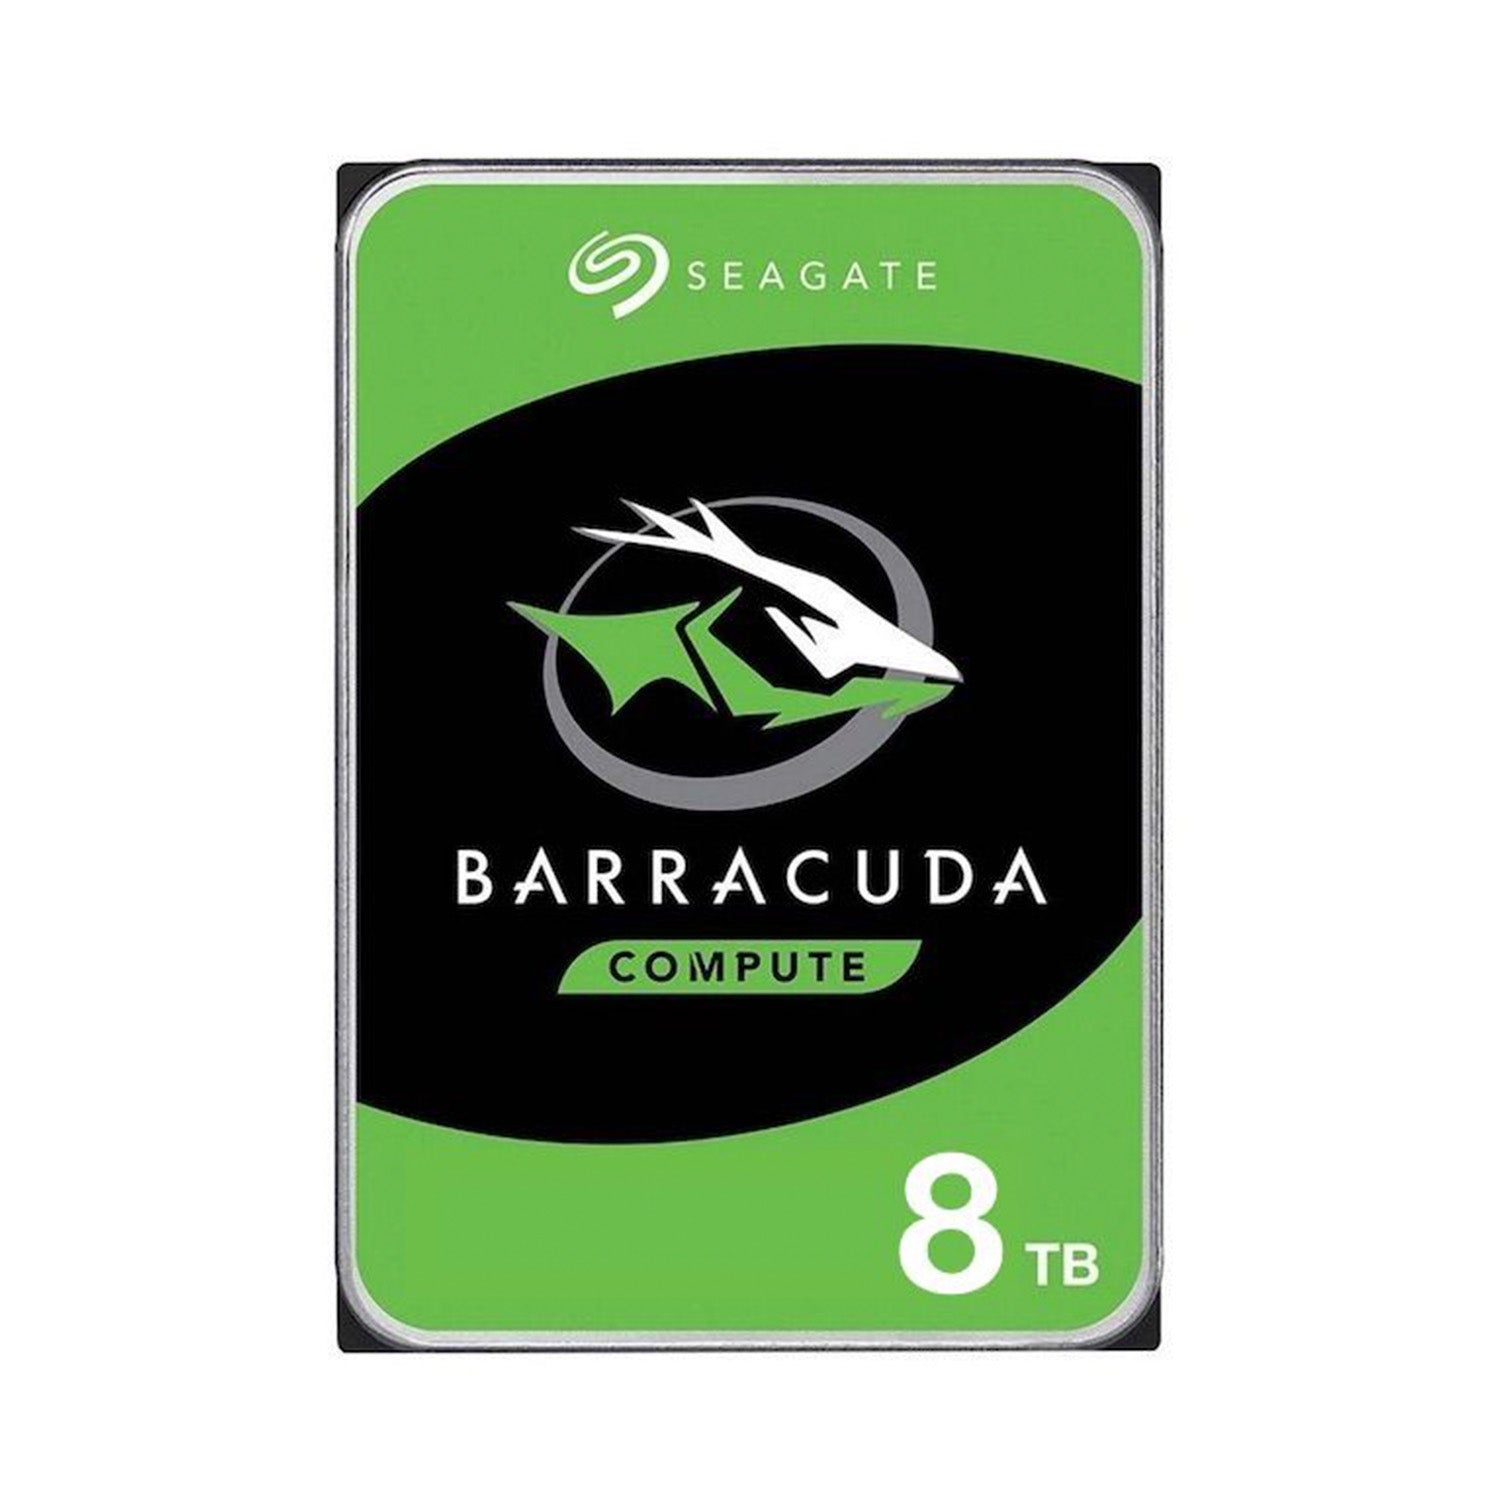 Seagate Barracuda 8TB HDD Internal Hard Drive  (3.5 Inch) SATA III 6 Gb/s 5400 RPM 256 MB Cache - High performance for Computer Desktop PC (ST8000DM004)